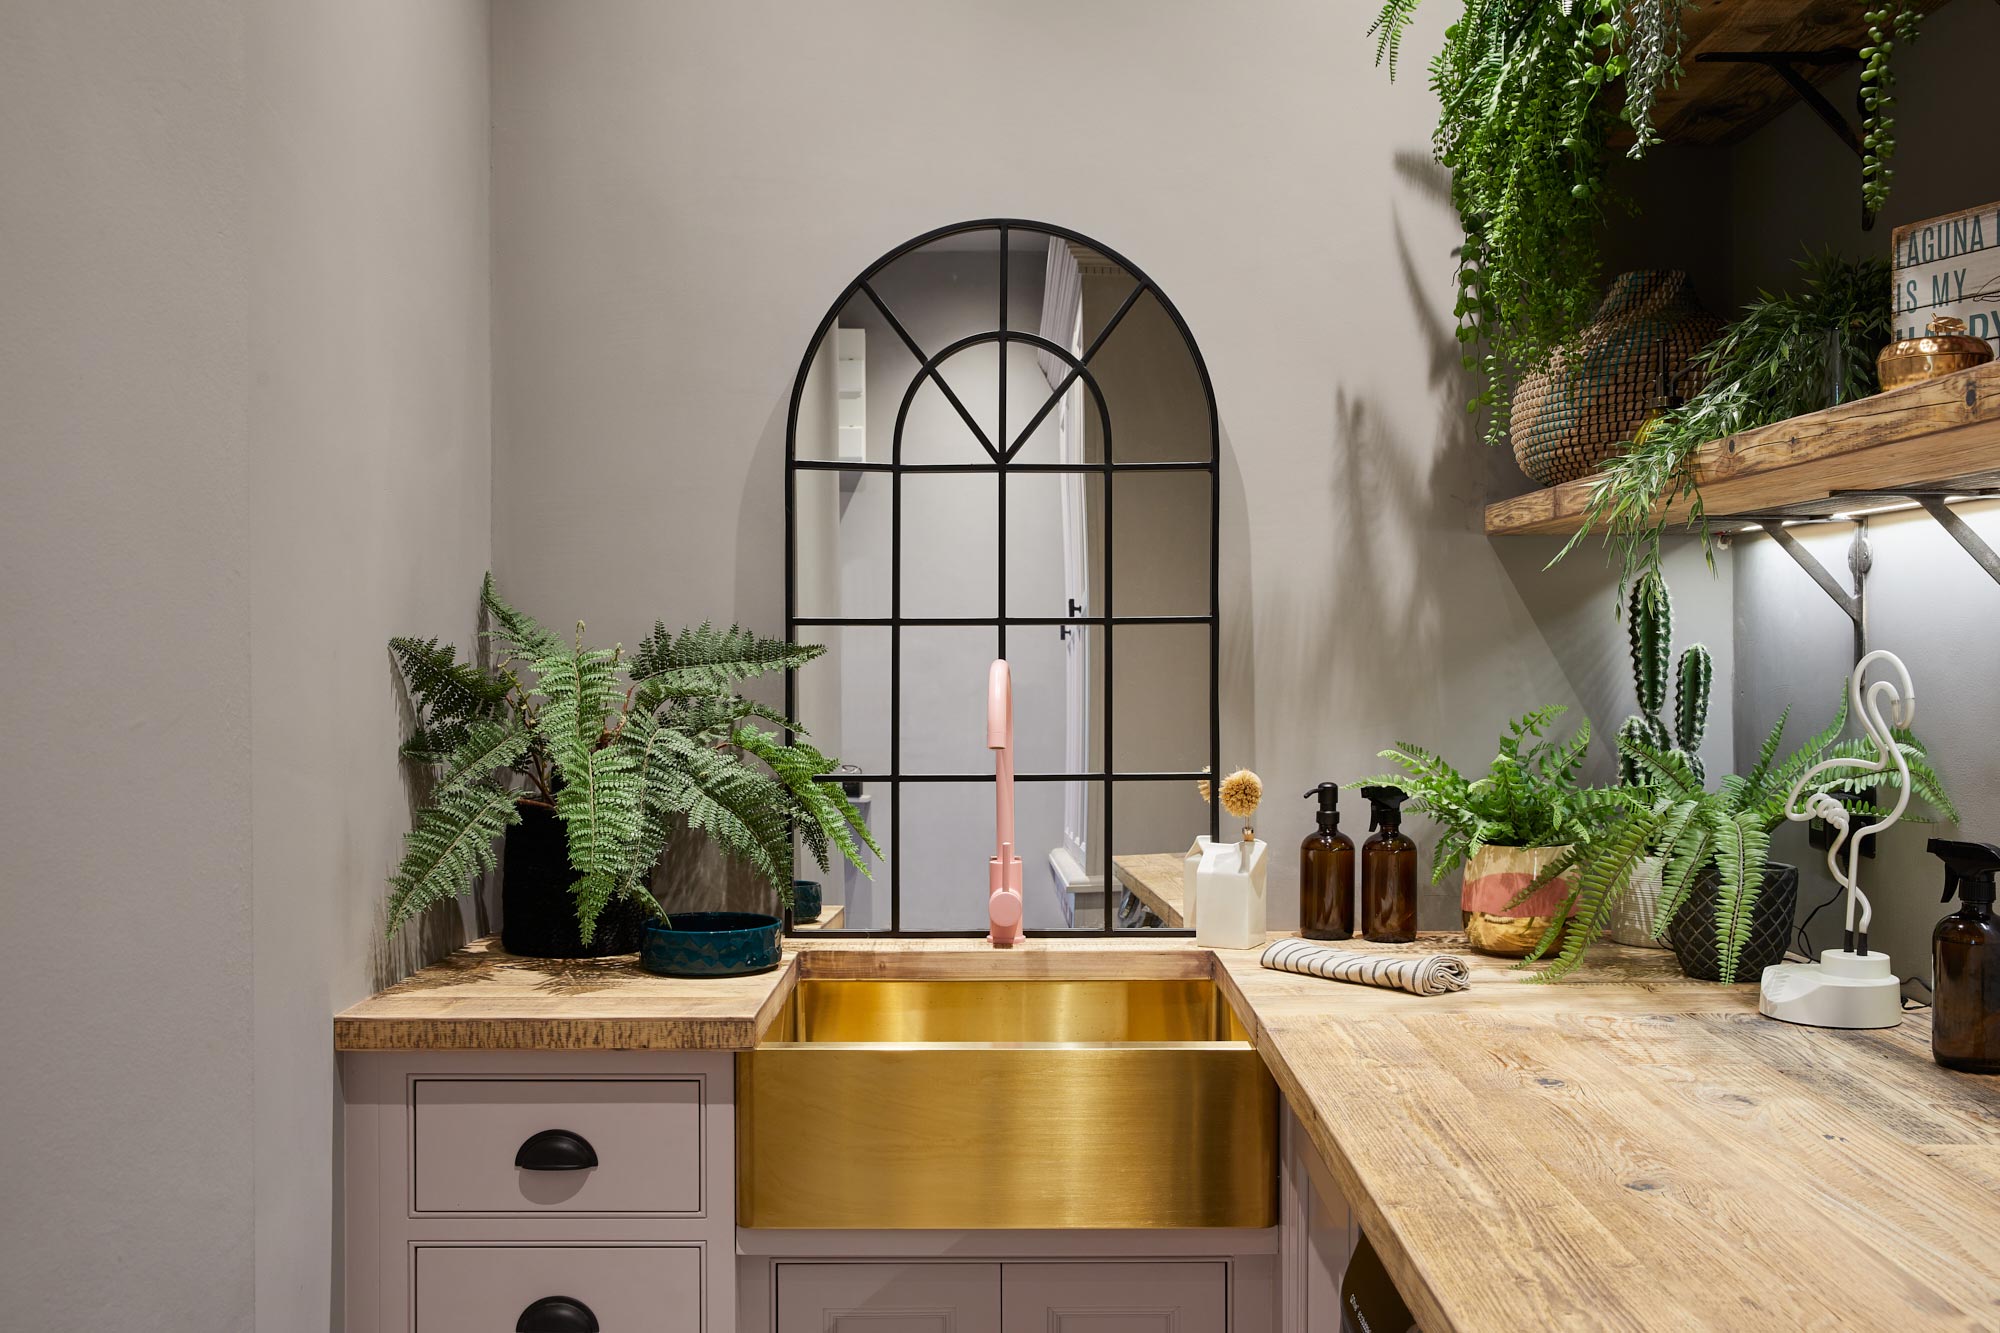 Brass belfast sink with pink tap